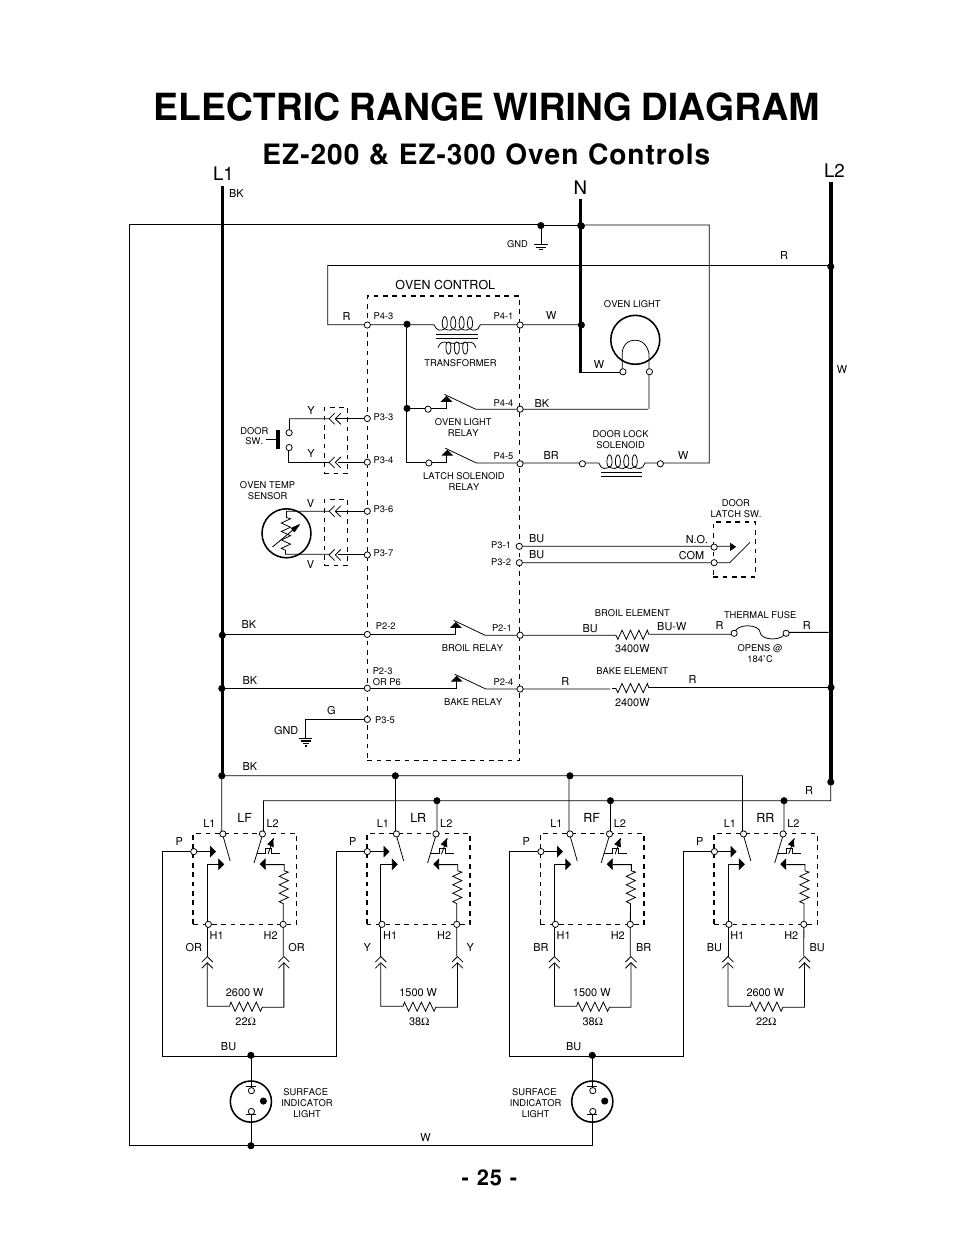 Electric Range Wiring Diagram L1 L2 N Whirlpool 465 User Manual Page 27 32